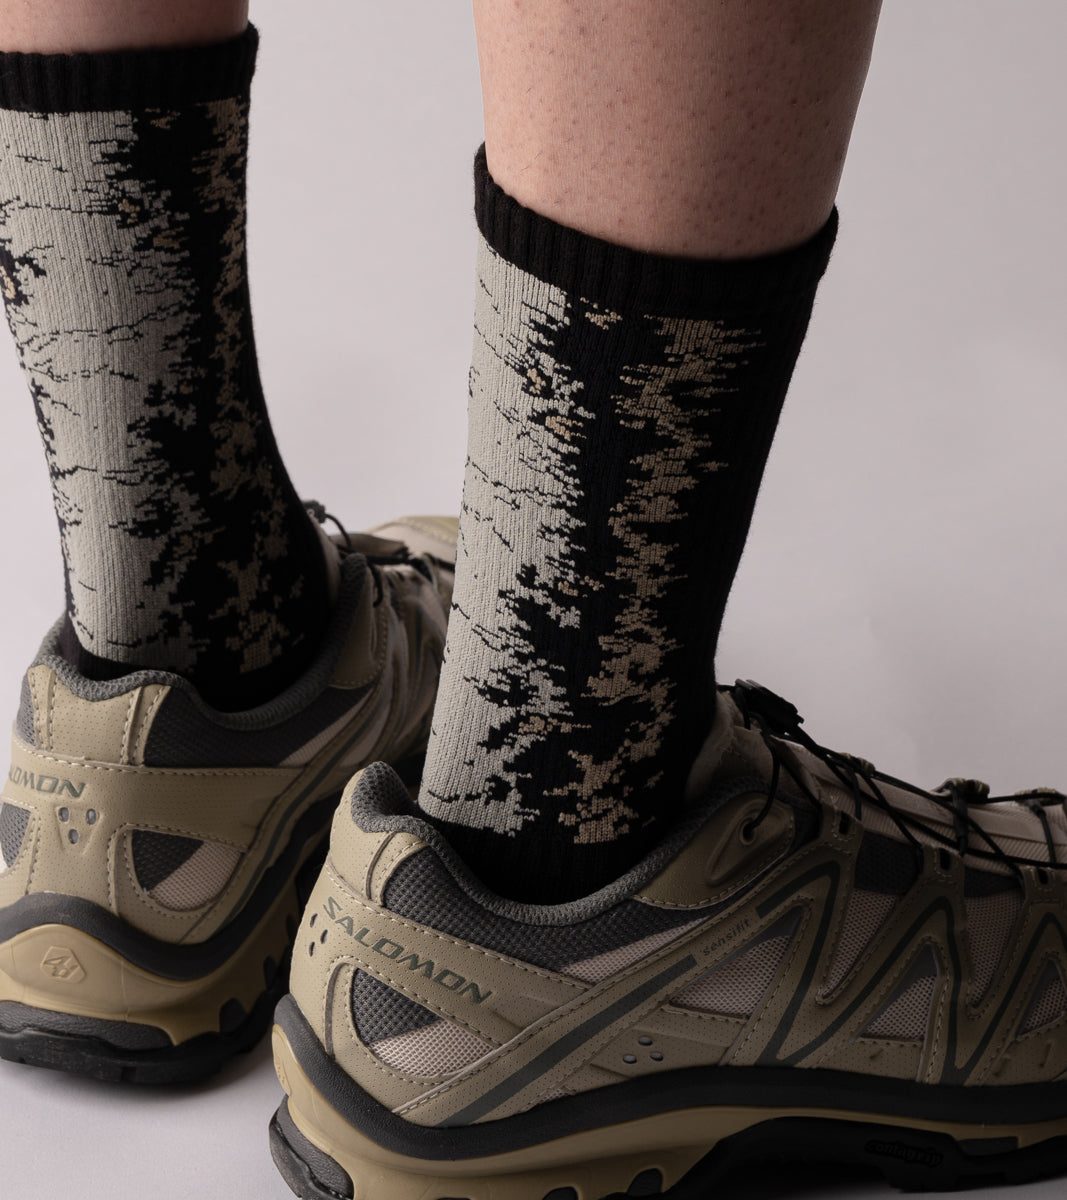 LANDING Midcalf socks - Gradient Acorn